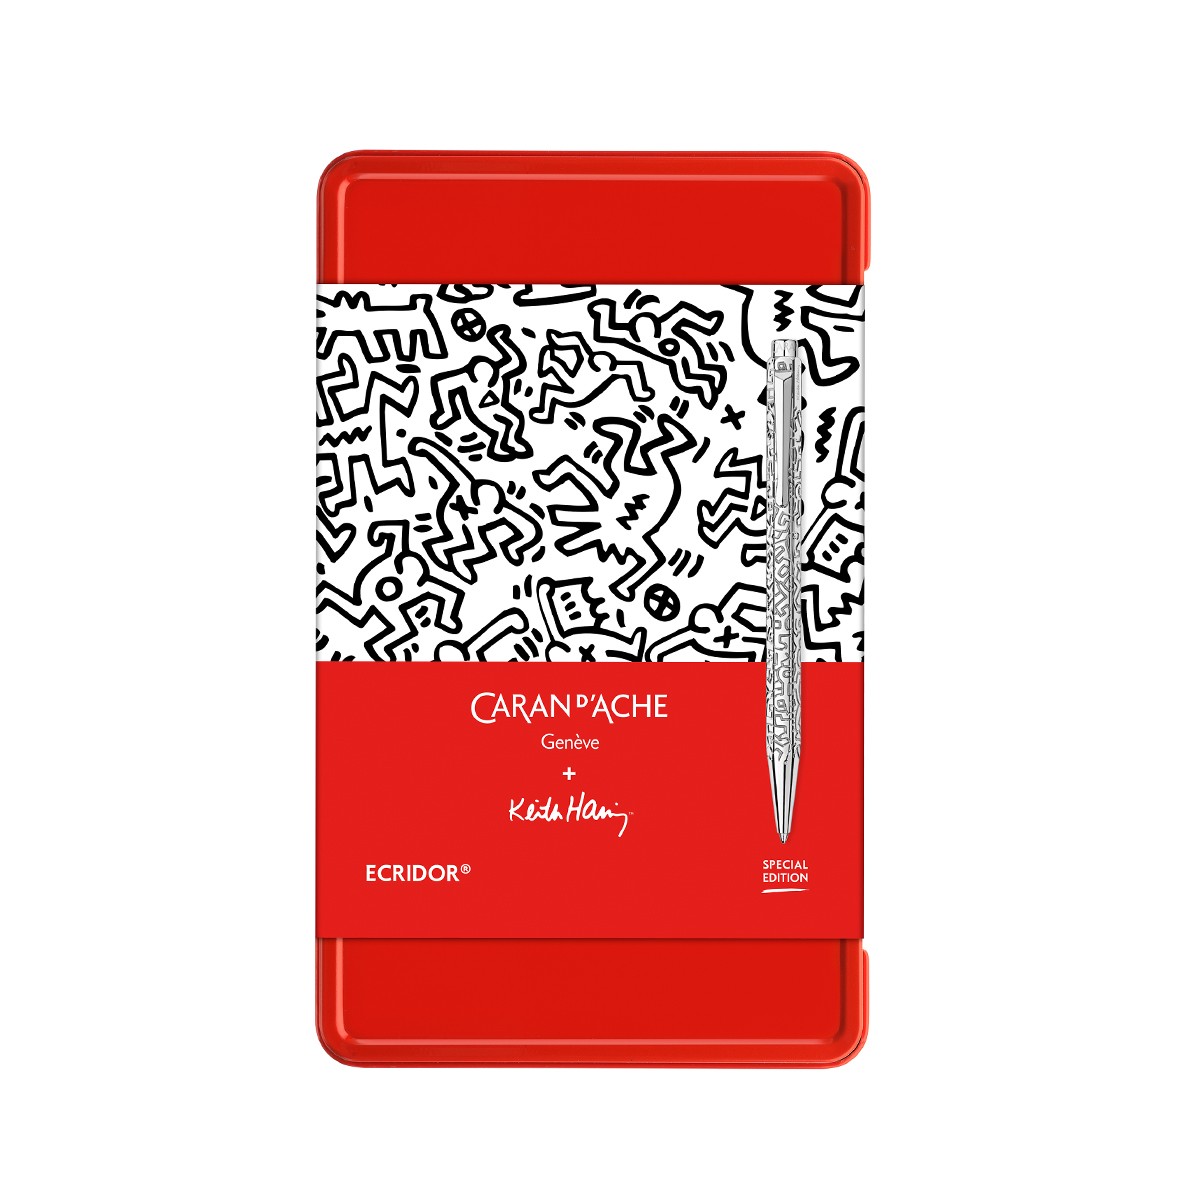 CARAN D'ACHE ECRIDOR + Keith Haring Σετ Στυλό Διαρκείας & Δερμάτινη Θήκη  - Special Edition